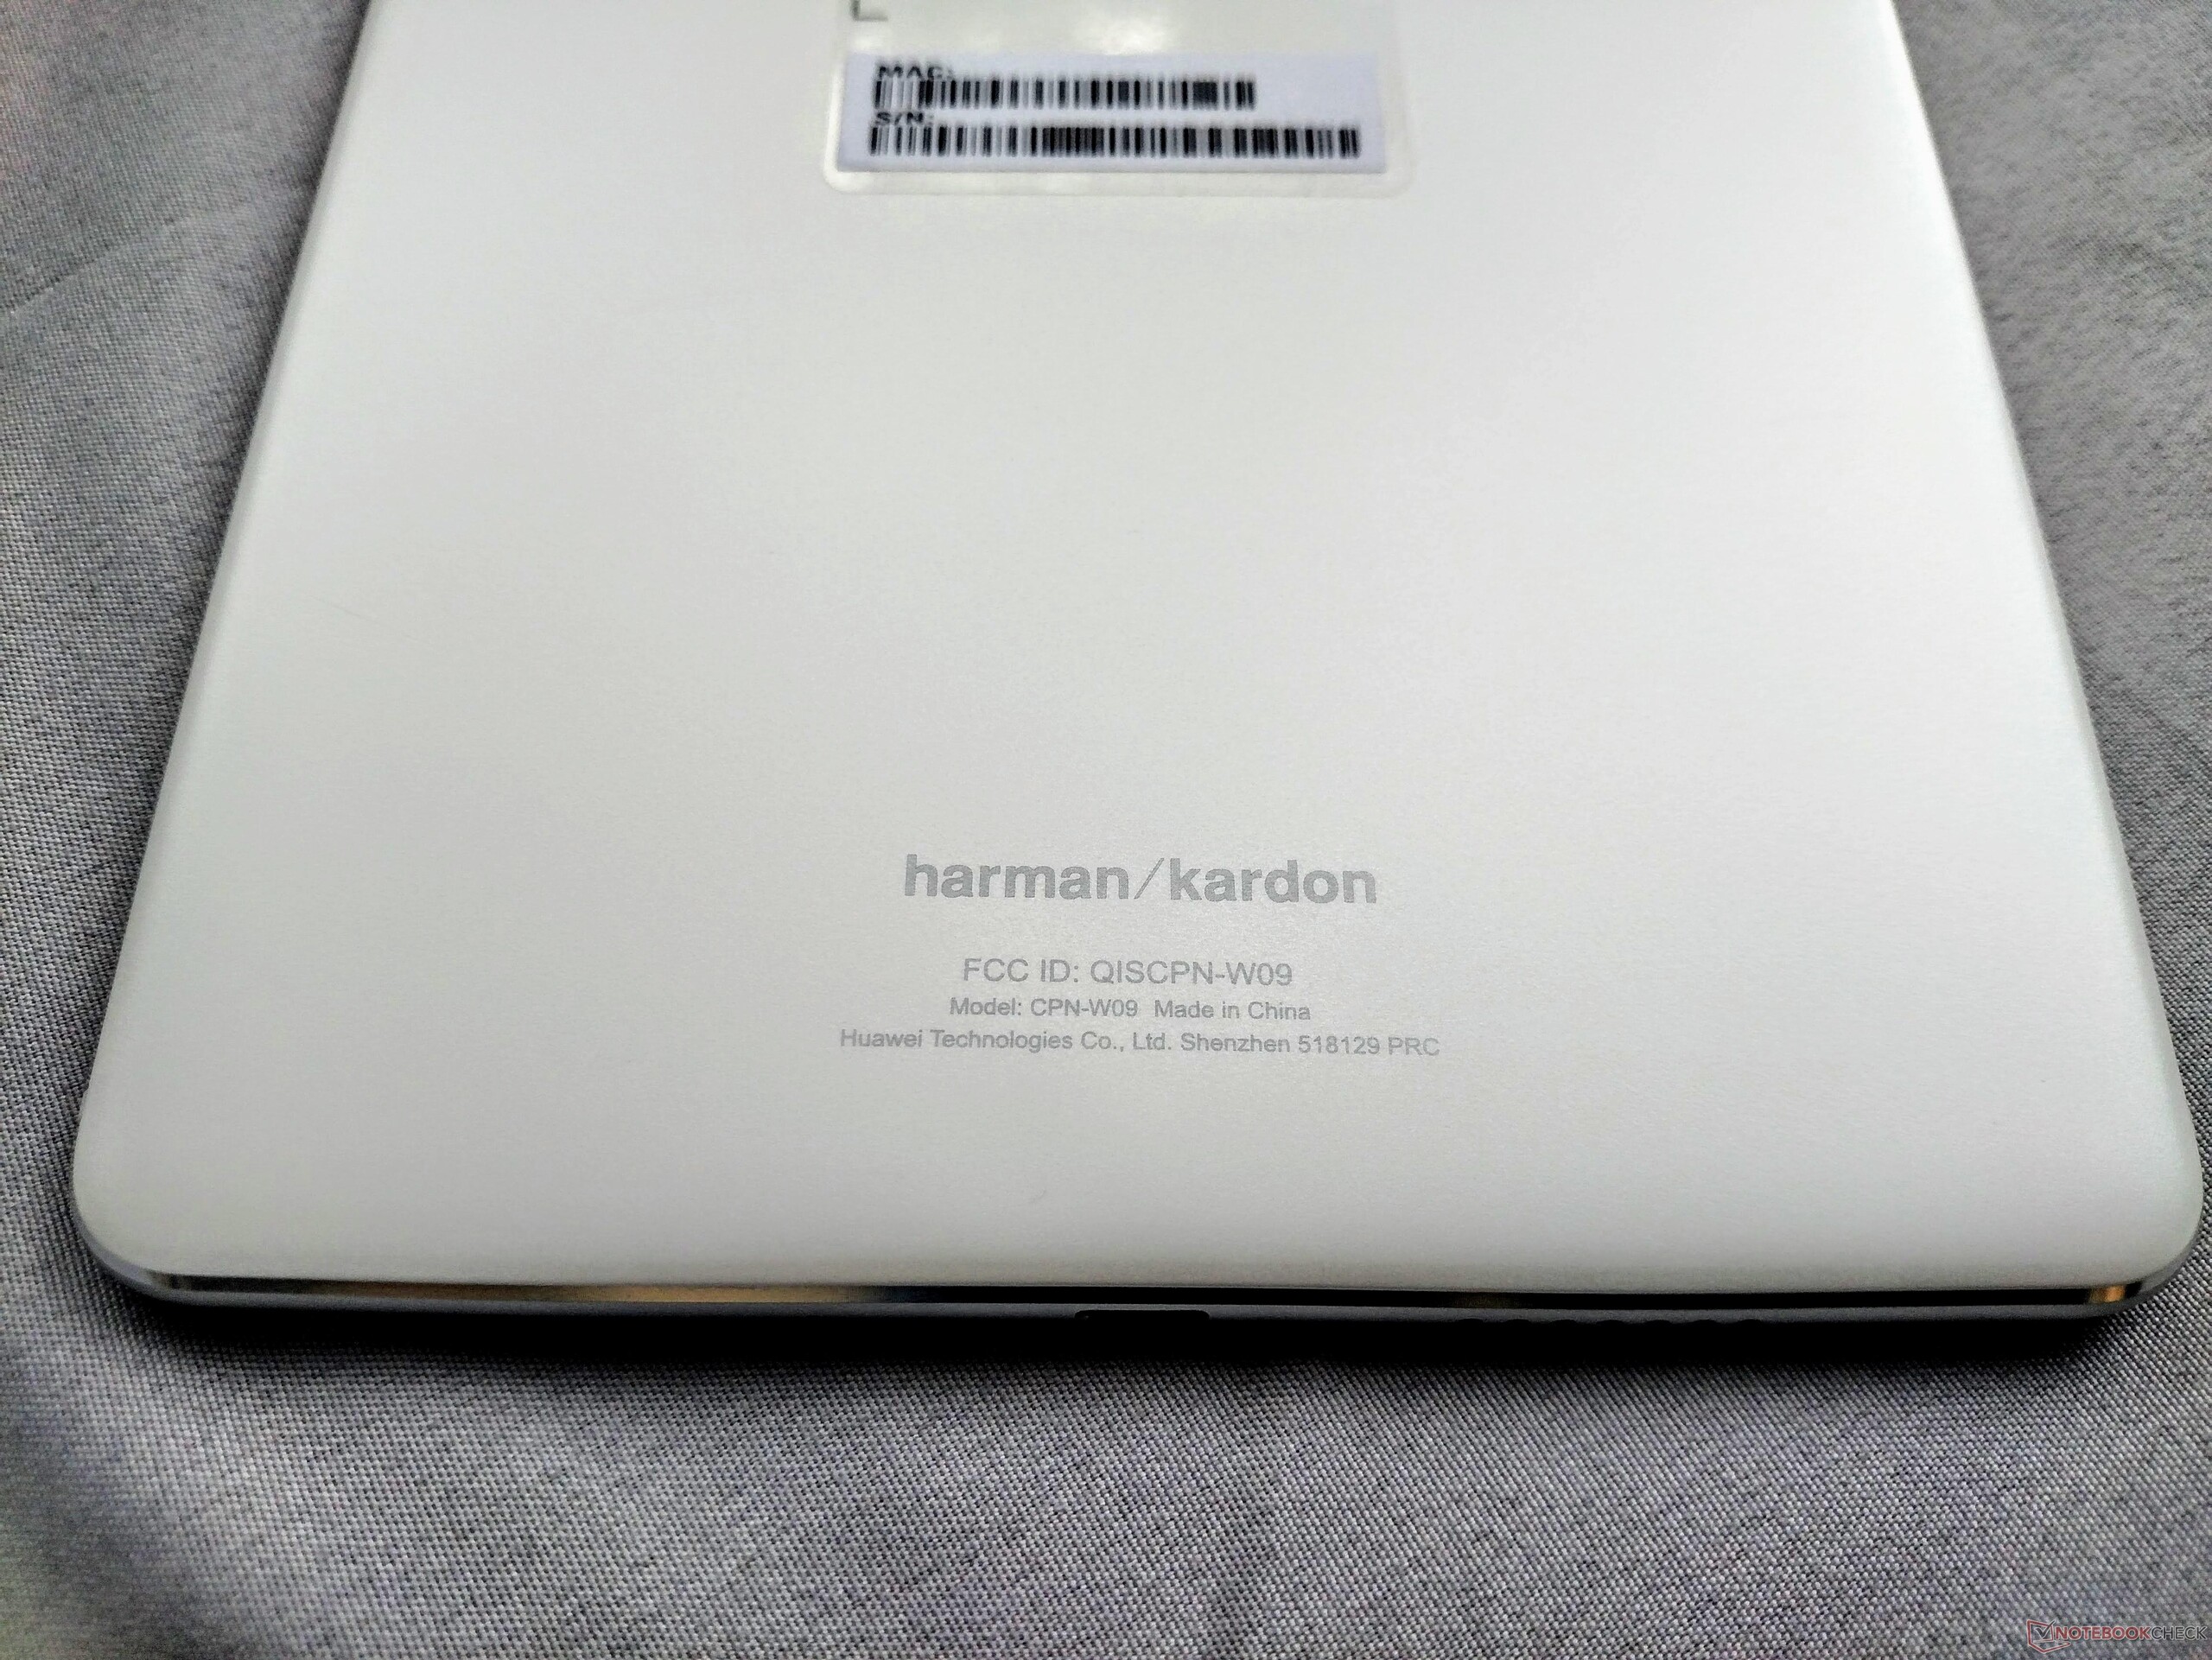 Huawei MediaPad M3 Lite 8 Tablet Review - NotebookCheck.net Reviews